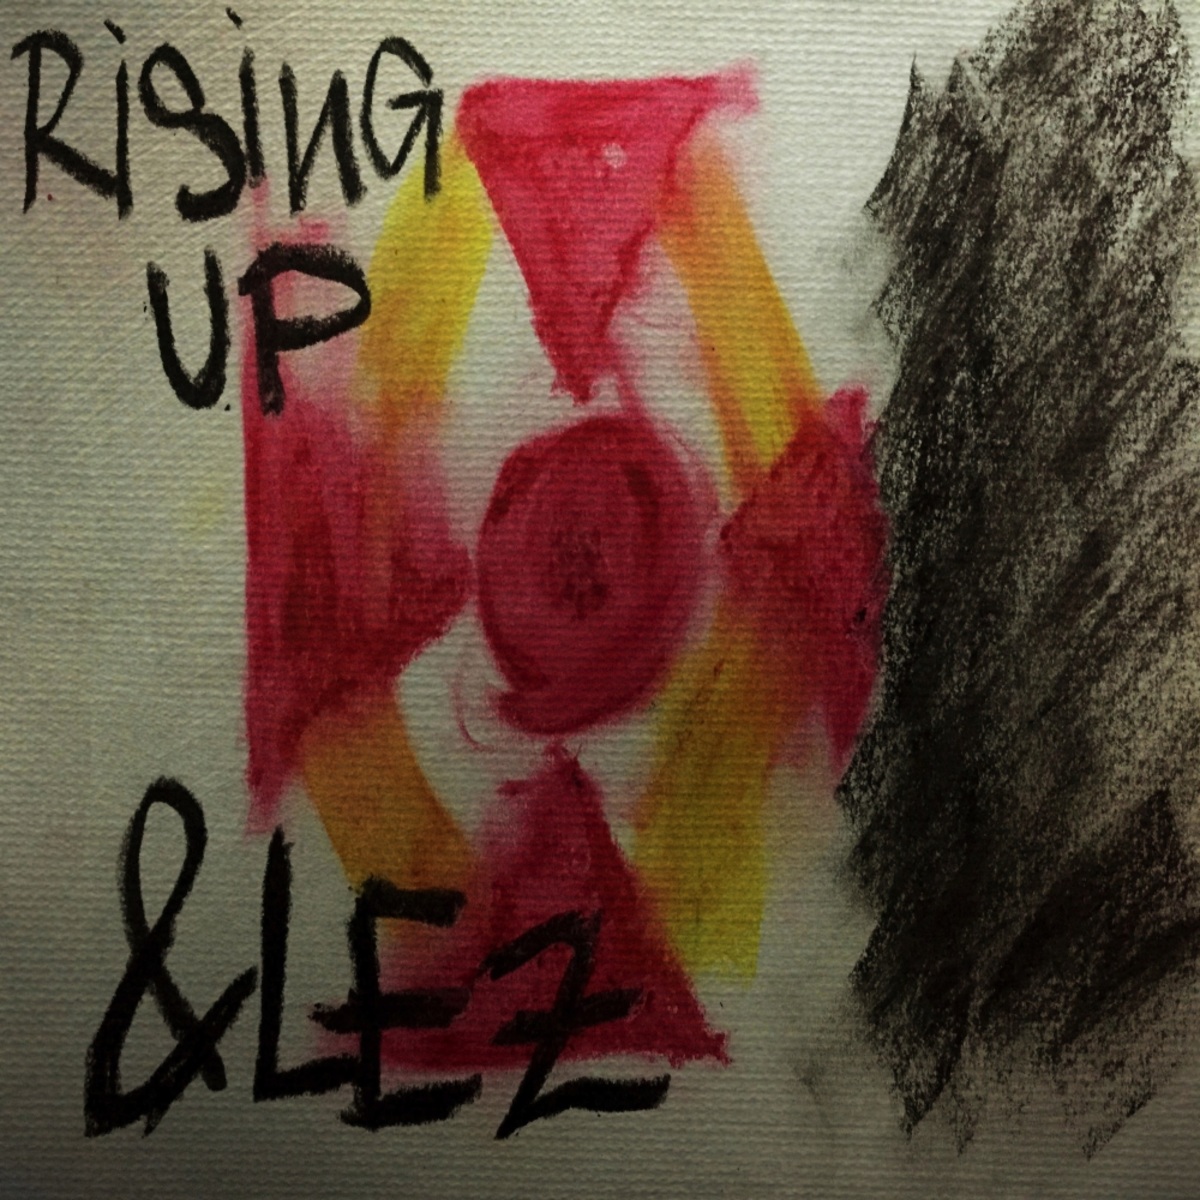 &lez - Rising Up / Visile Records